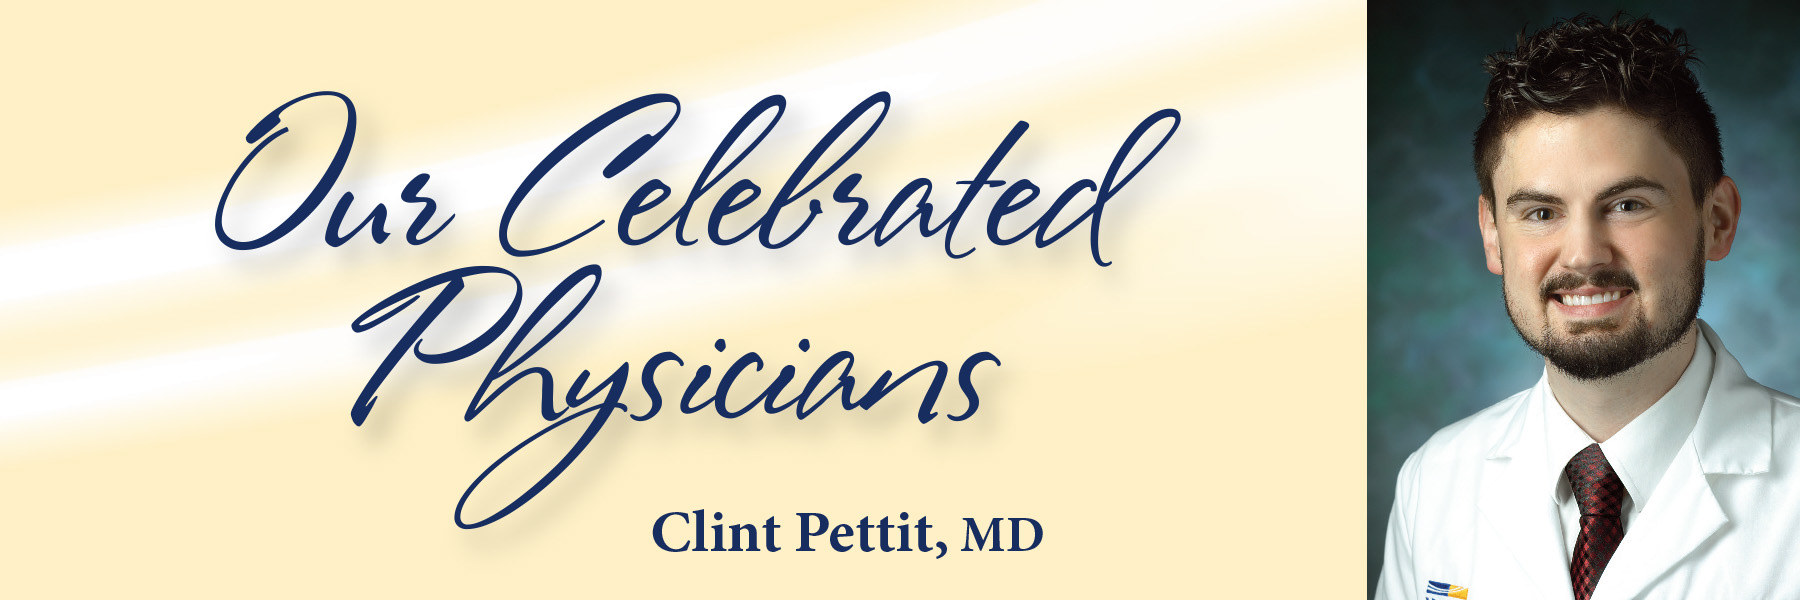 Celebrated-Physician-BLOG_Pettit-Clint